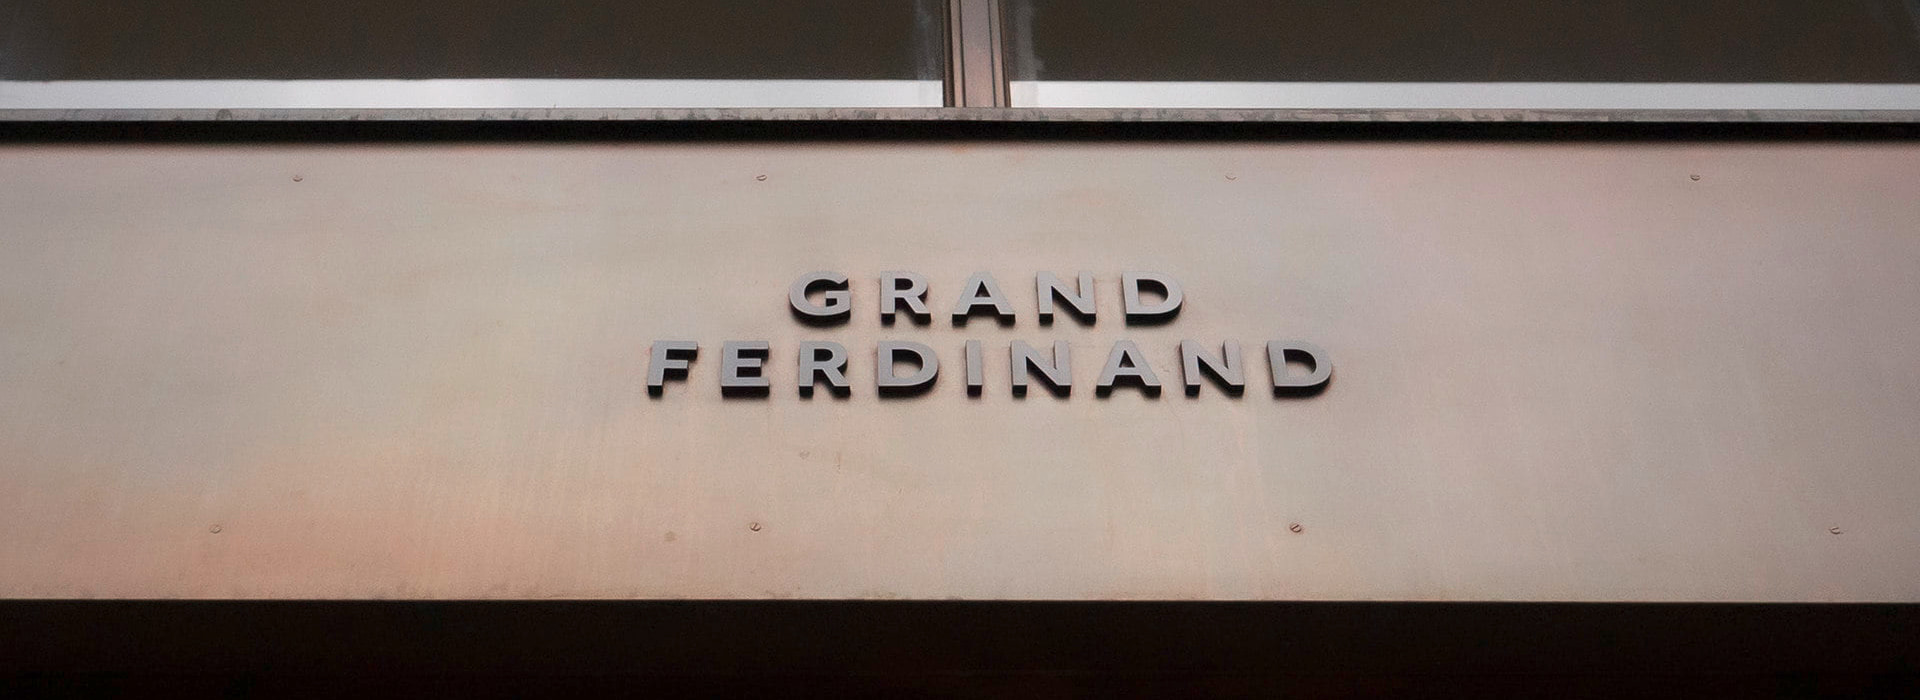 Grand Ferdinand | Projekt | Dunkler